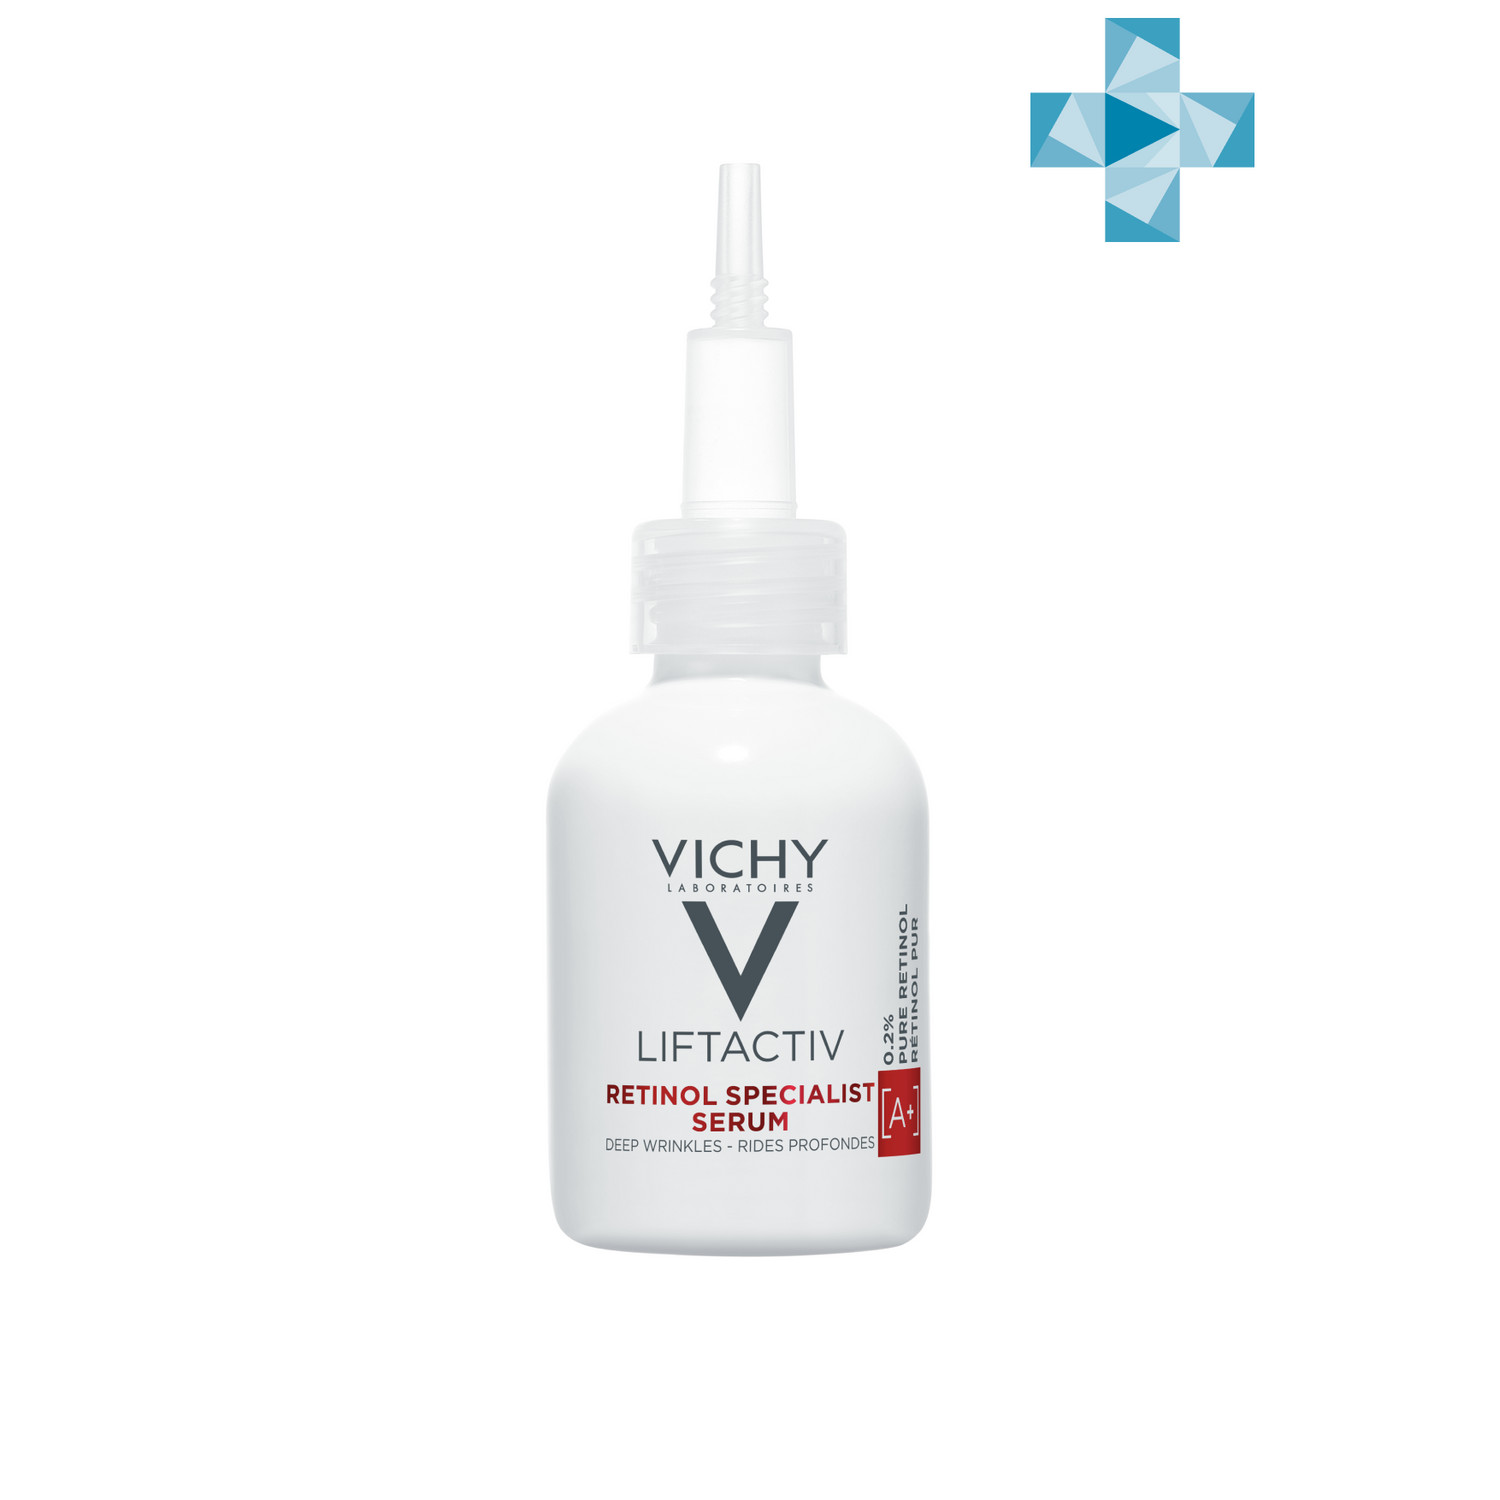 Vichy Сыворотка для коррекции глубоких морщин Retinol Specialist, 30 мл (Vichy, Liftactiv) сыворотка для лица vichy liftactiv retinol specialist сыворотка для коррекции глубоких морщин